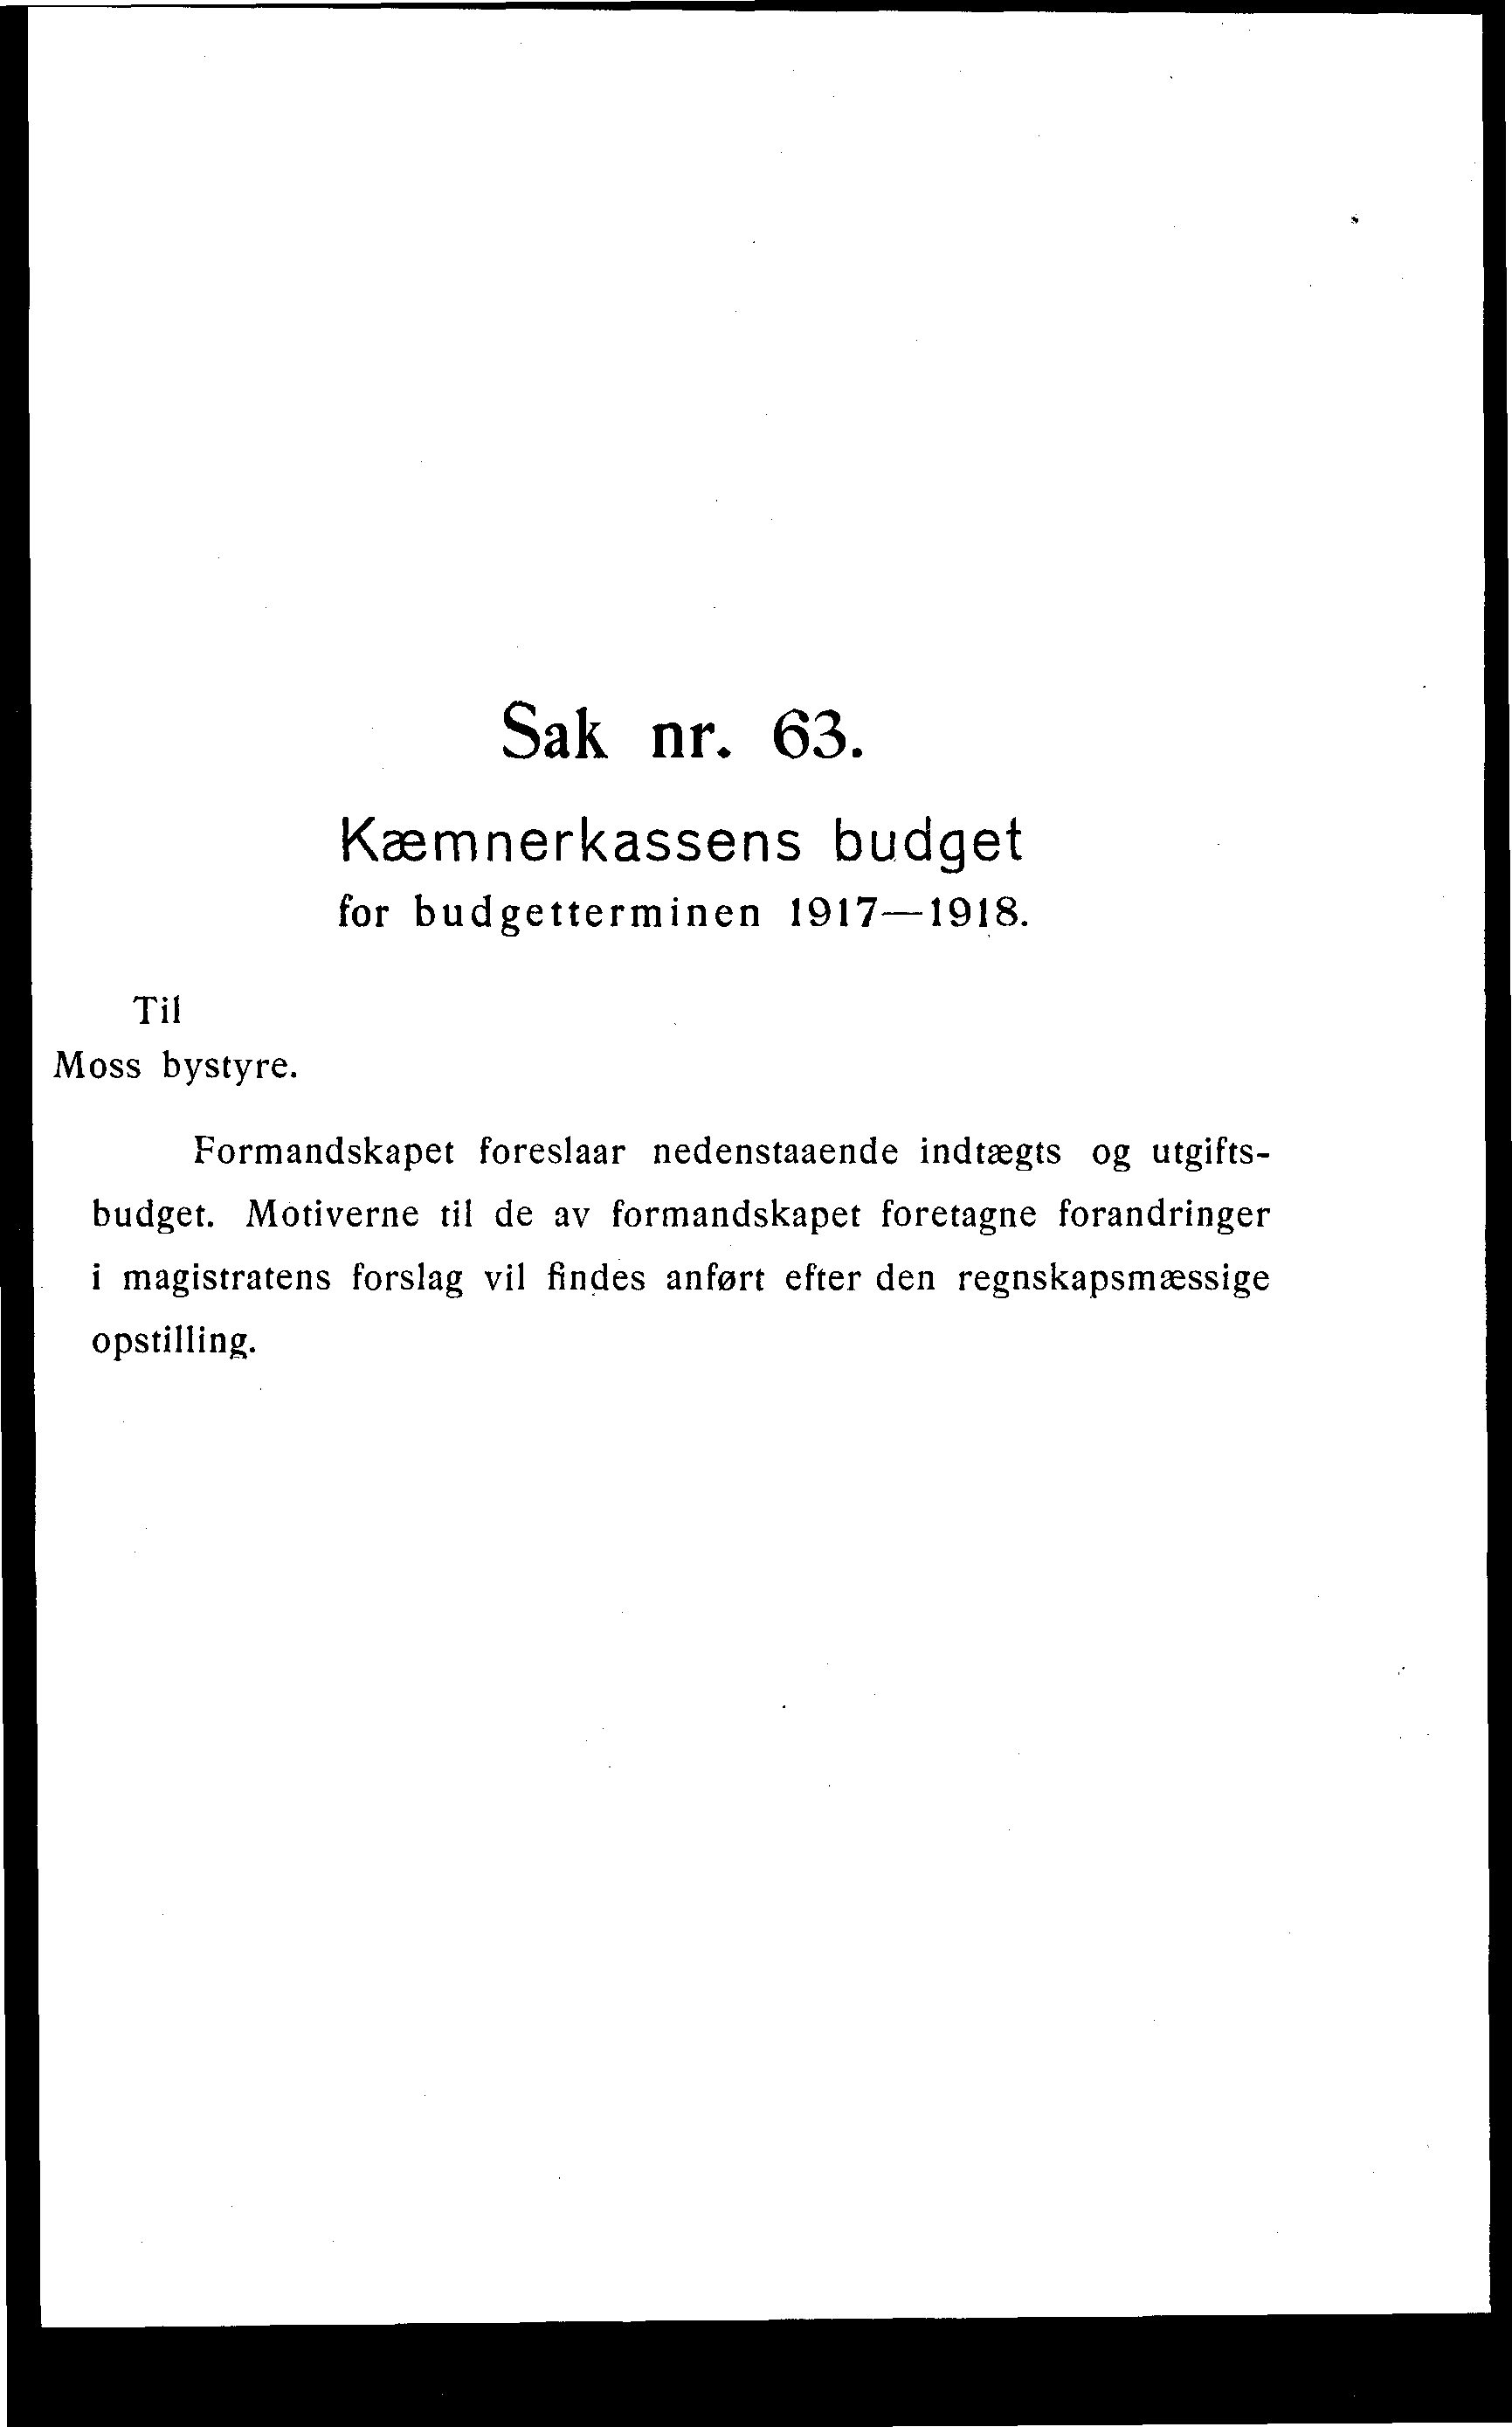 Sak nr. 63. Kaamnerkassens budget for budgetterminen 1917-1918. Til Moss bystyre.